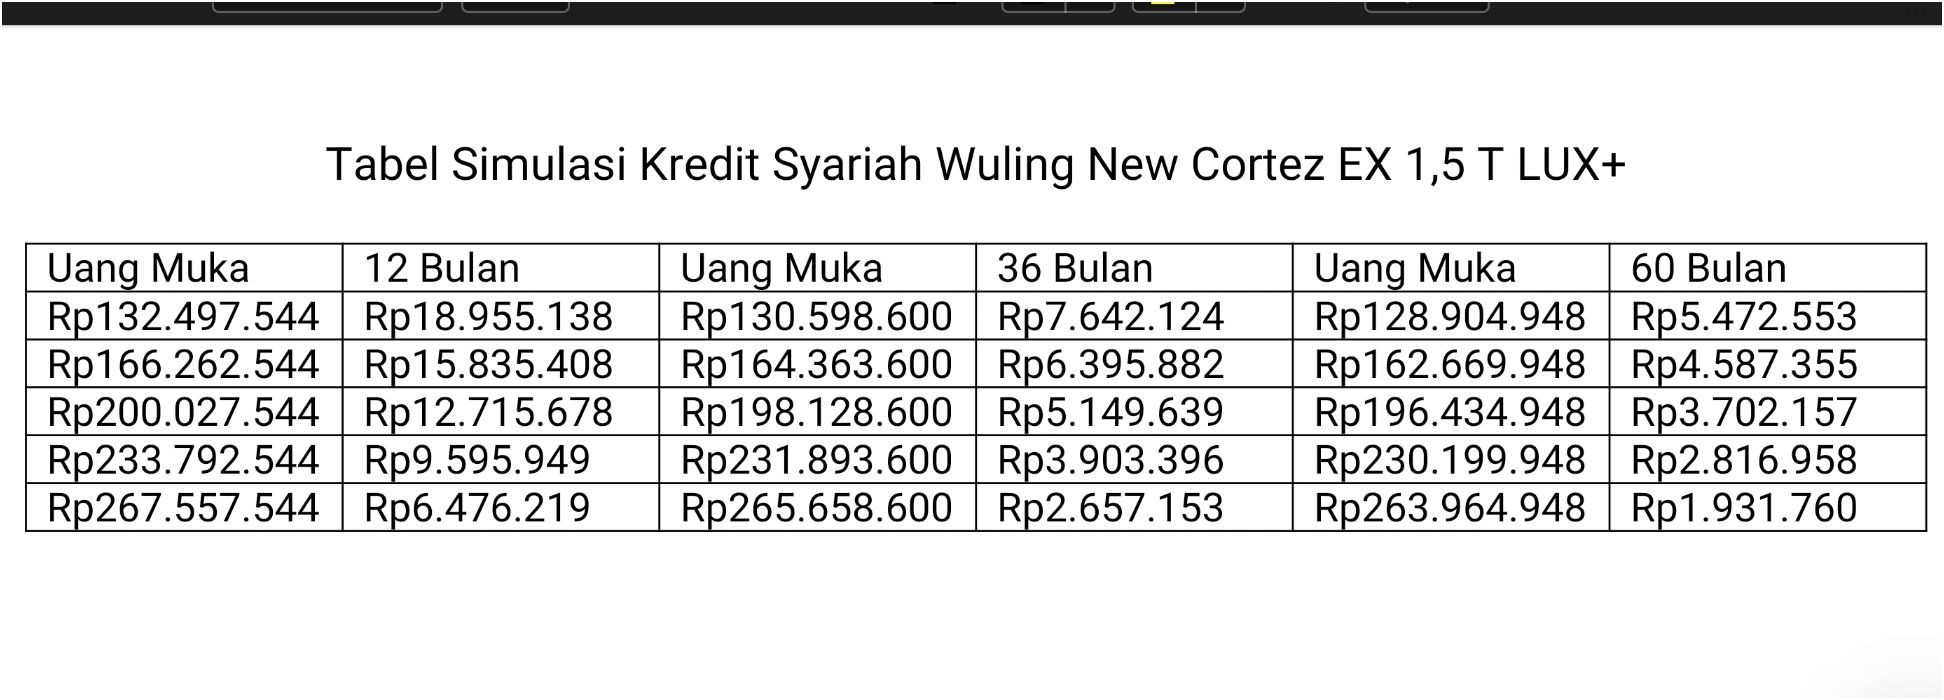 Tabel Simulasi Kredit Syariah Wuling New Cortez EX 1,5 T LUX+.